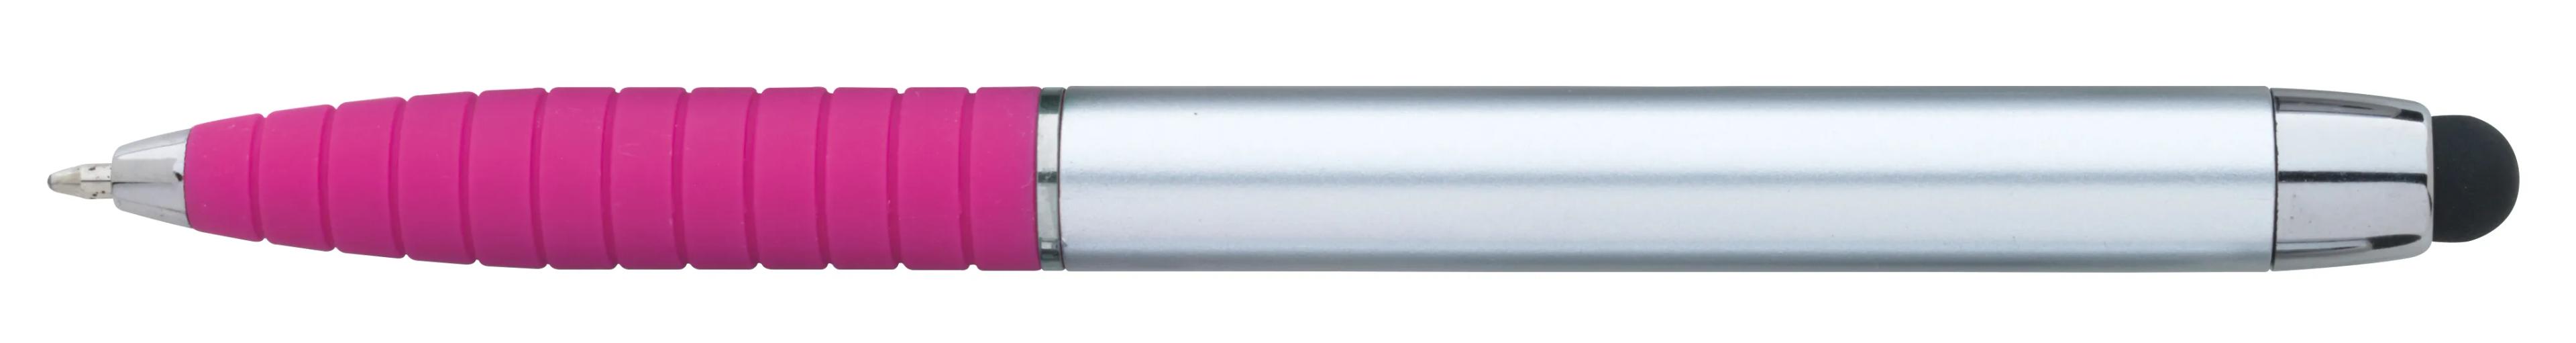 Silver Cool Grip Stylus Pen 11 of 43